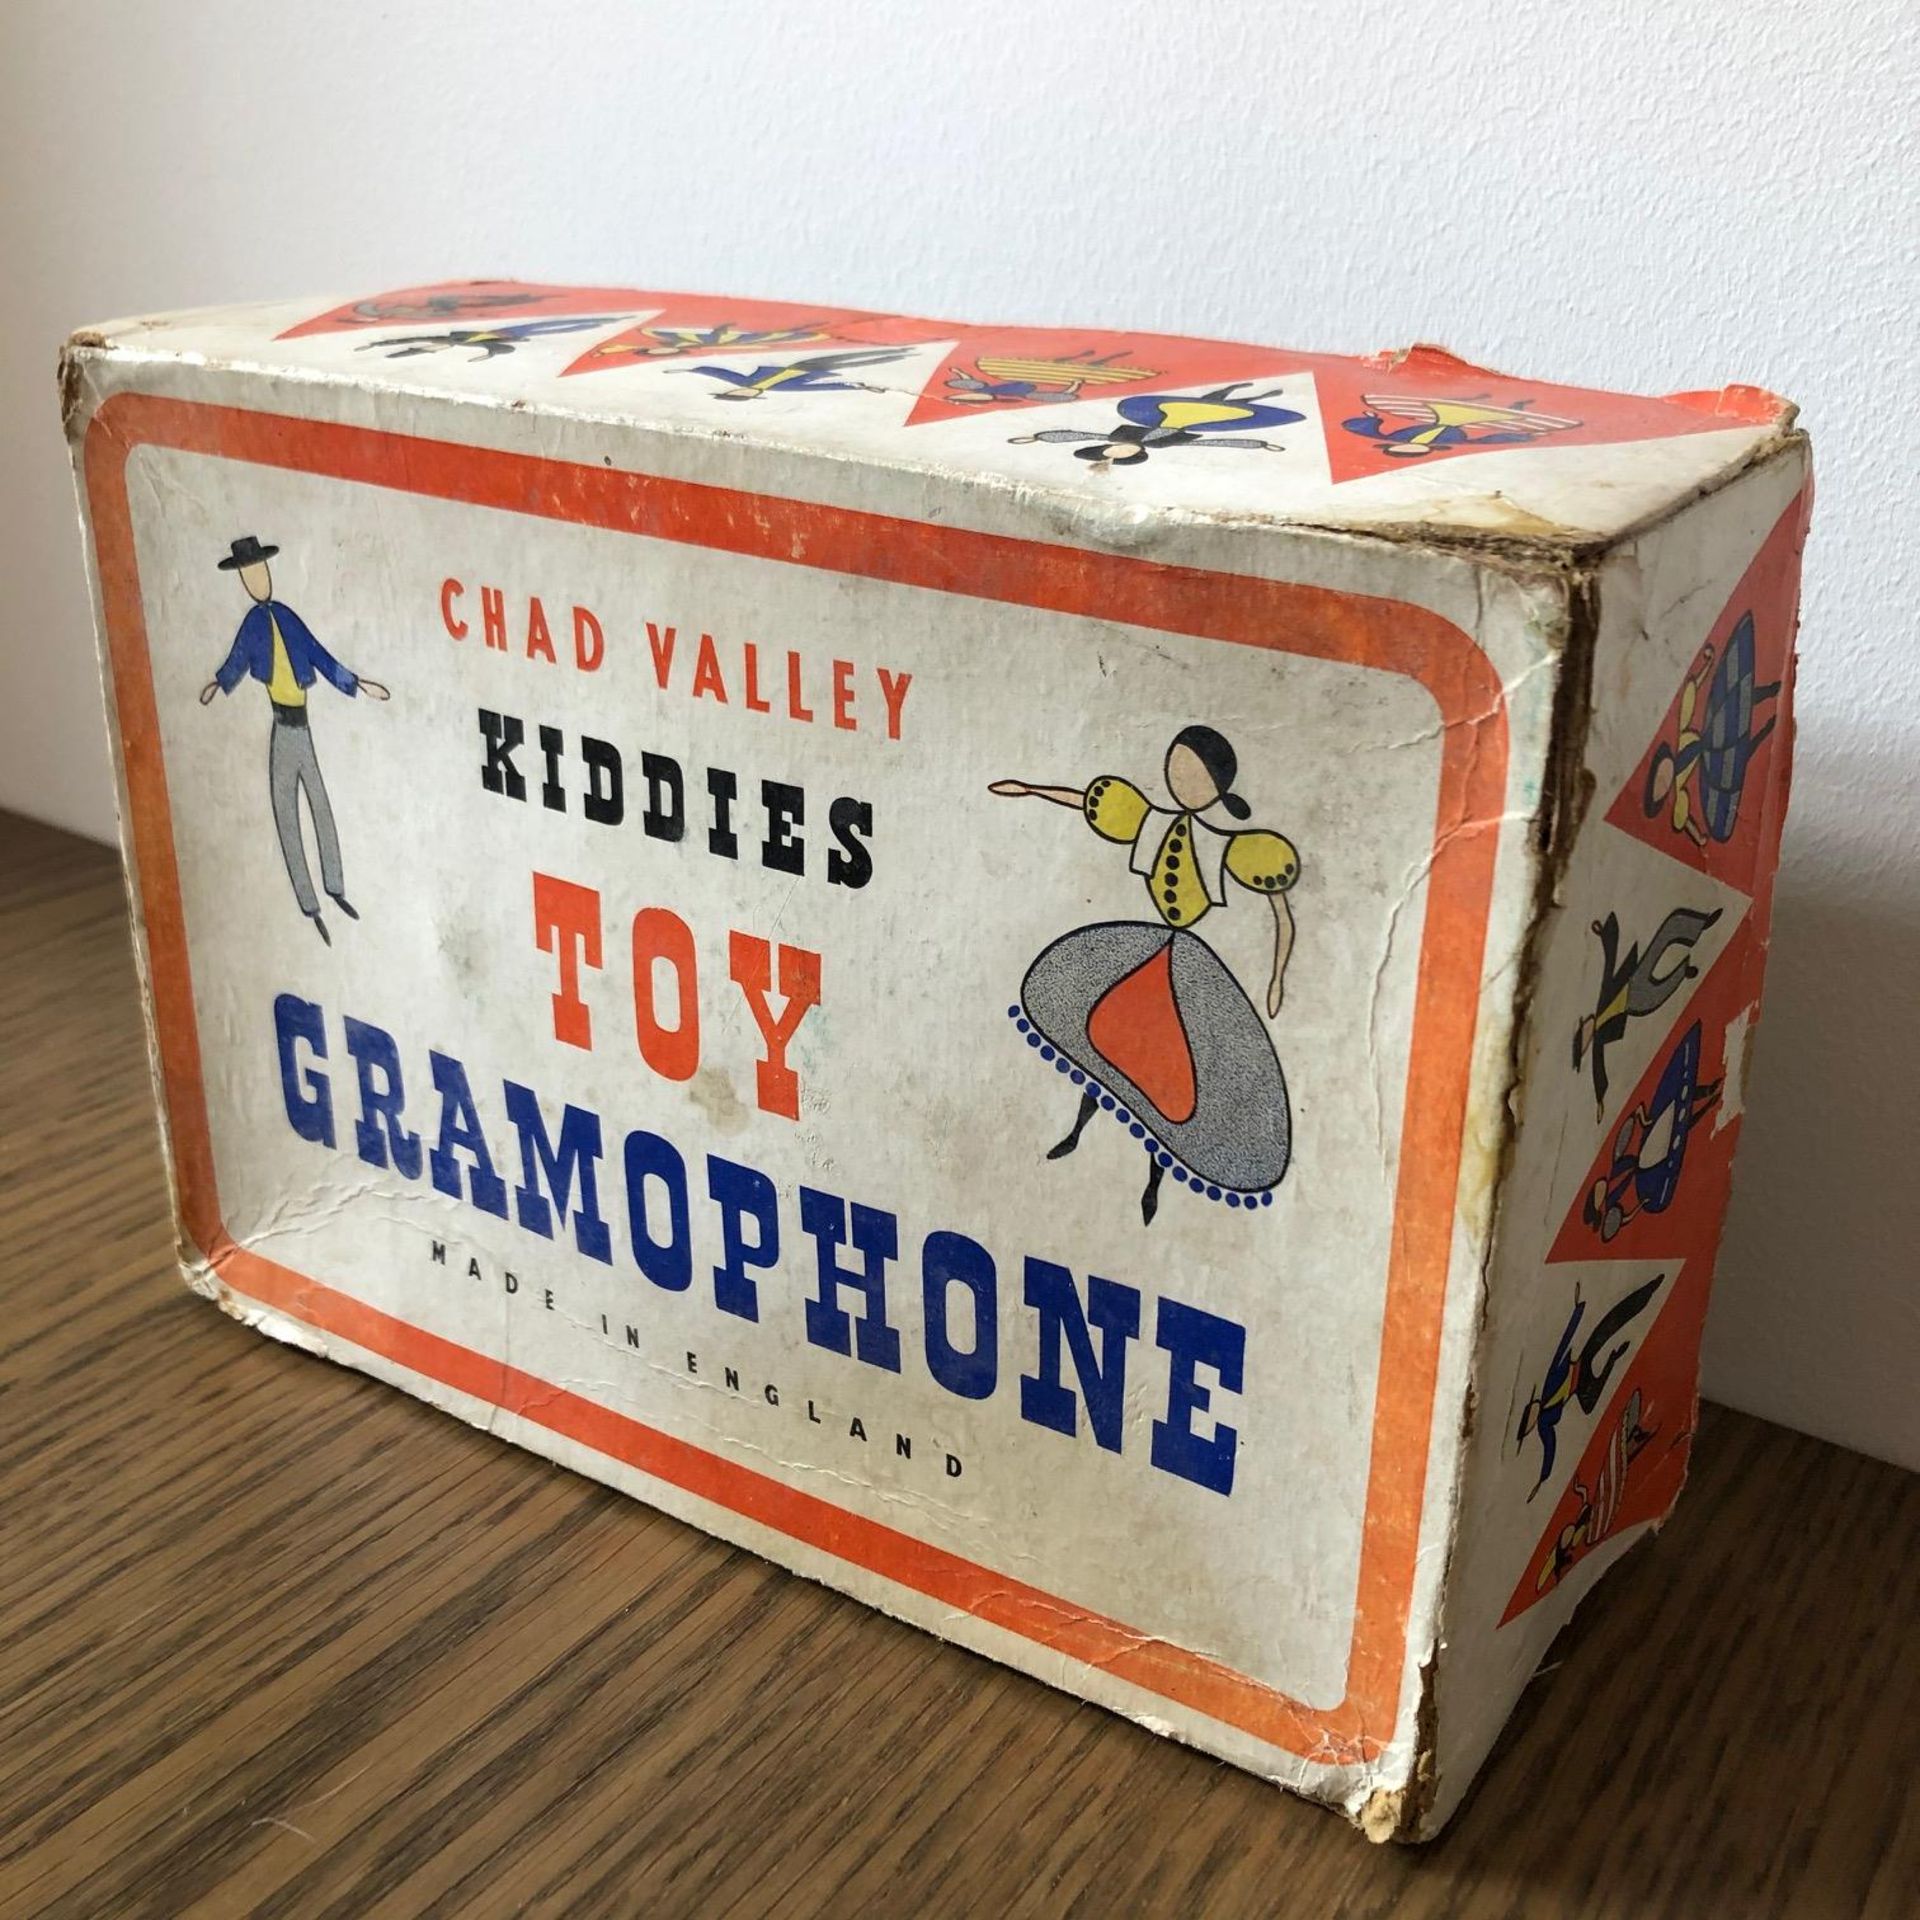 Chad Valley Kiddies Toy Gramophone - Image 10 of 10